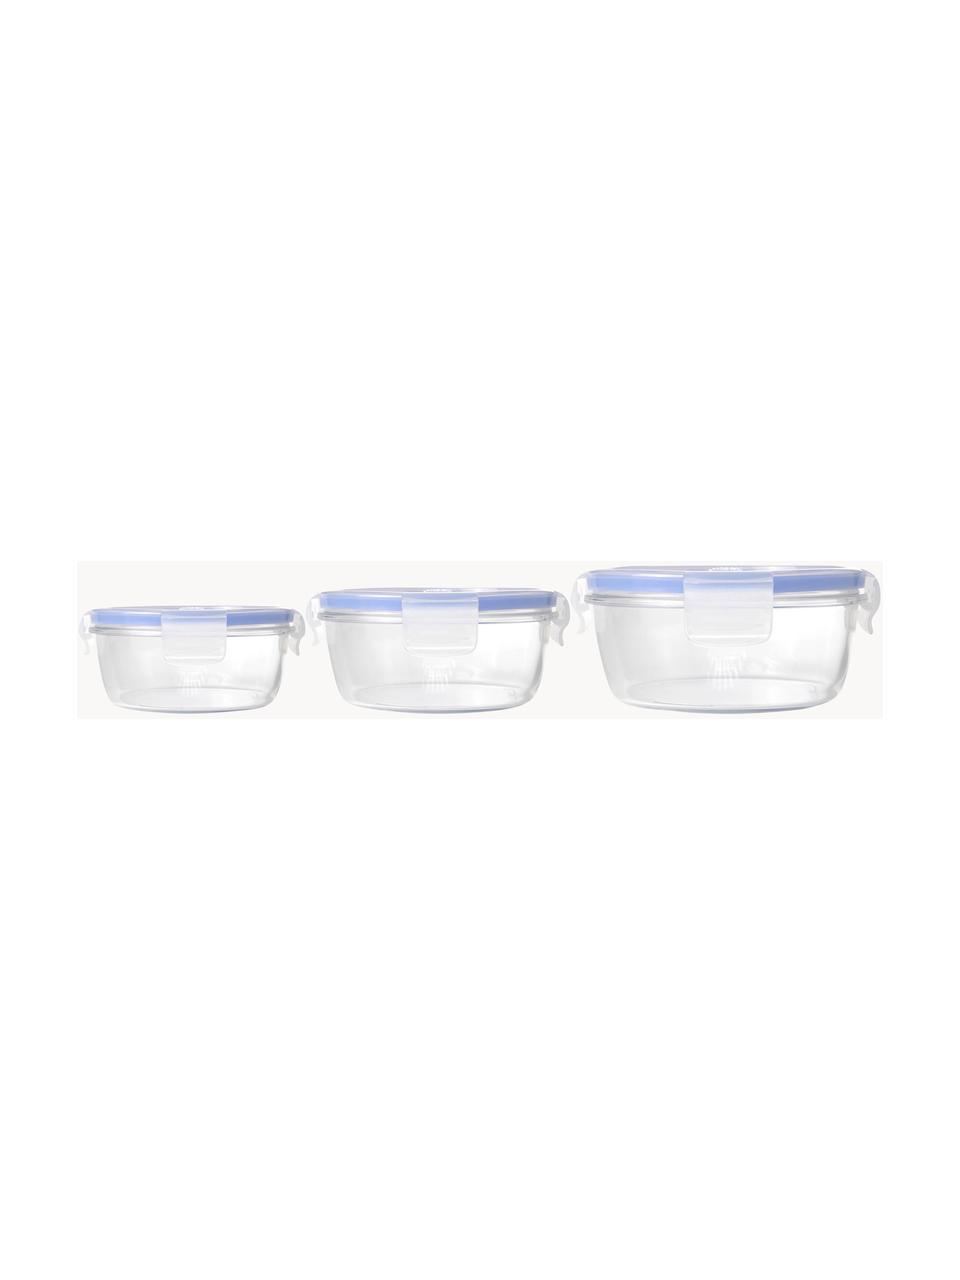 Set de recipientes herméticos redondos Pure, 3 uds., Recipiente: vidrio templado, Transparente, azul, Set de diferentes tamaños